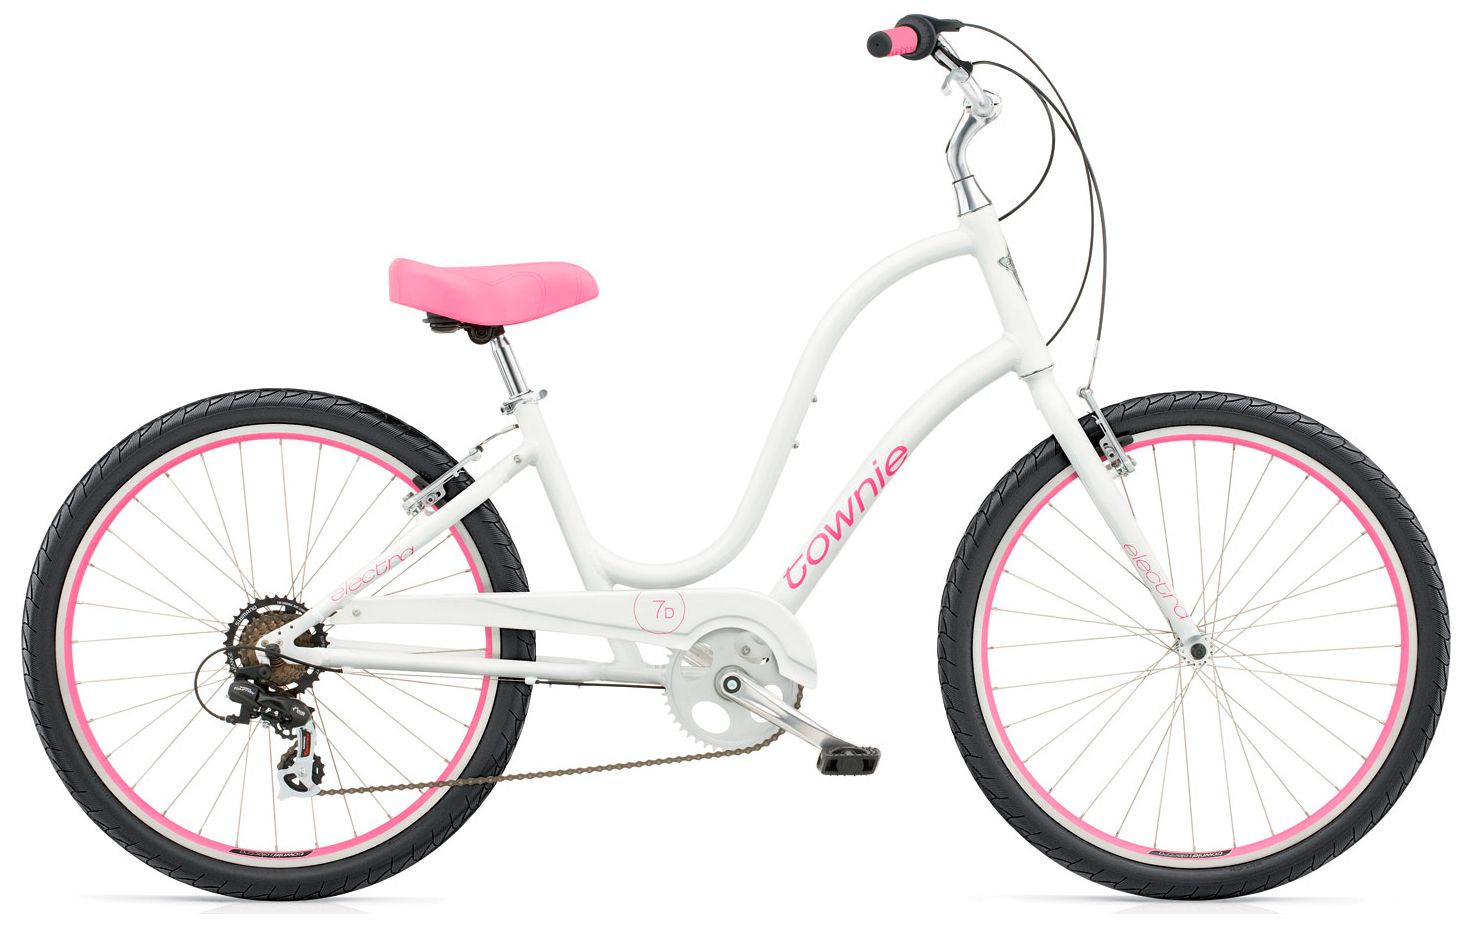  Велосипед Electra Townie Original 7D Ladies 2017